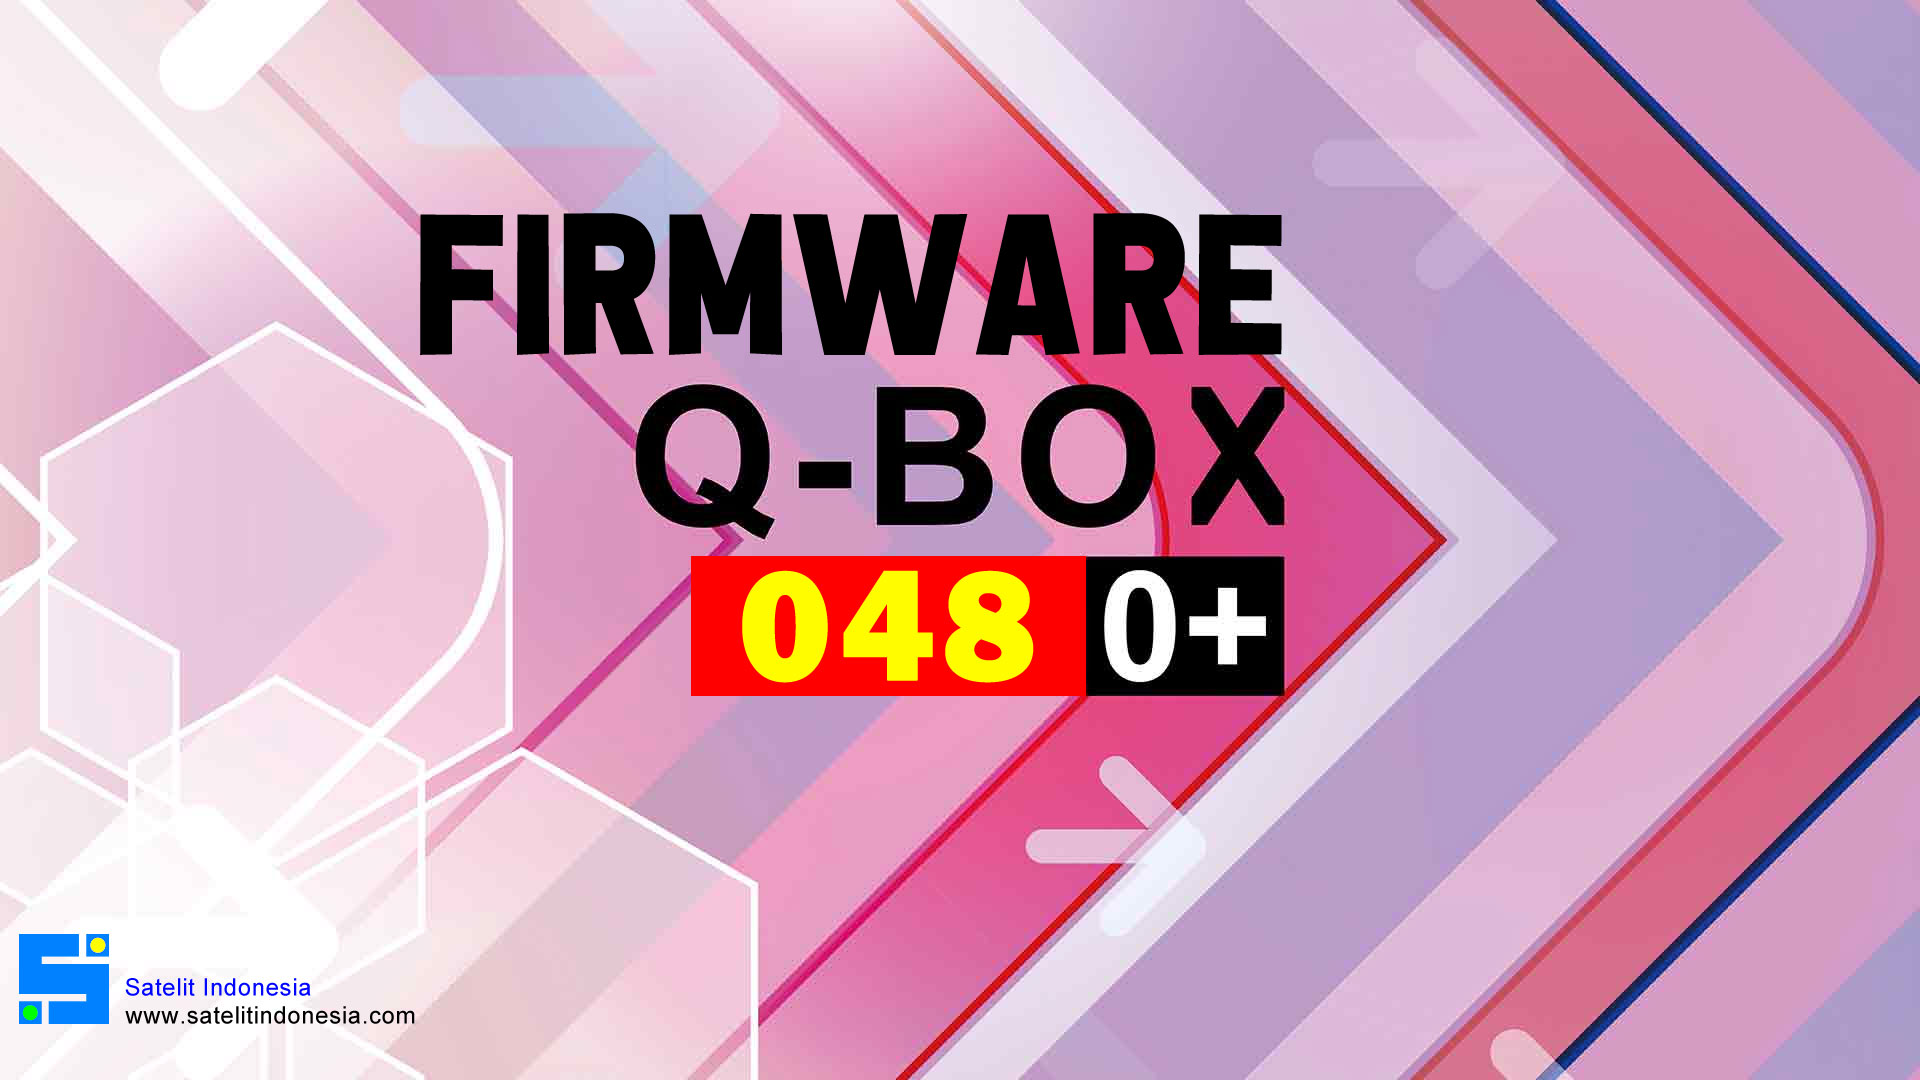 Download Software Q Box 0+ Zero Plus New Update Firmware Receiver